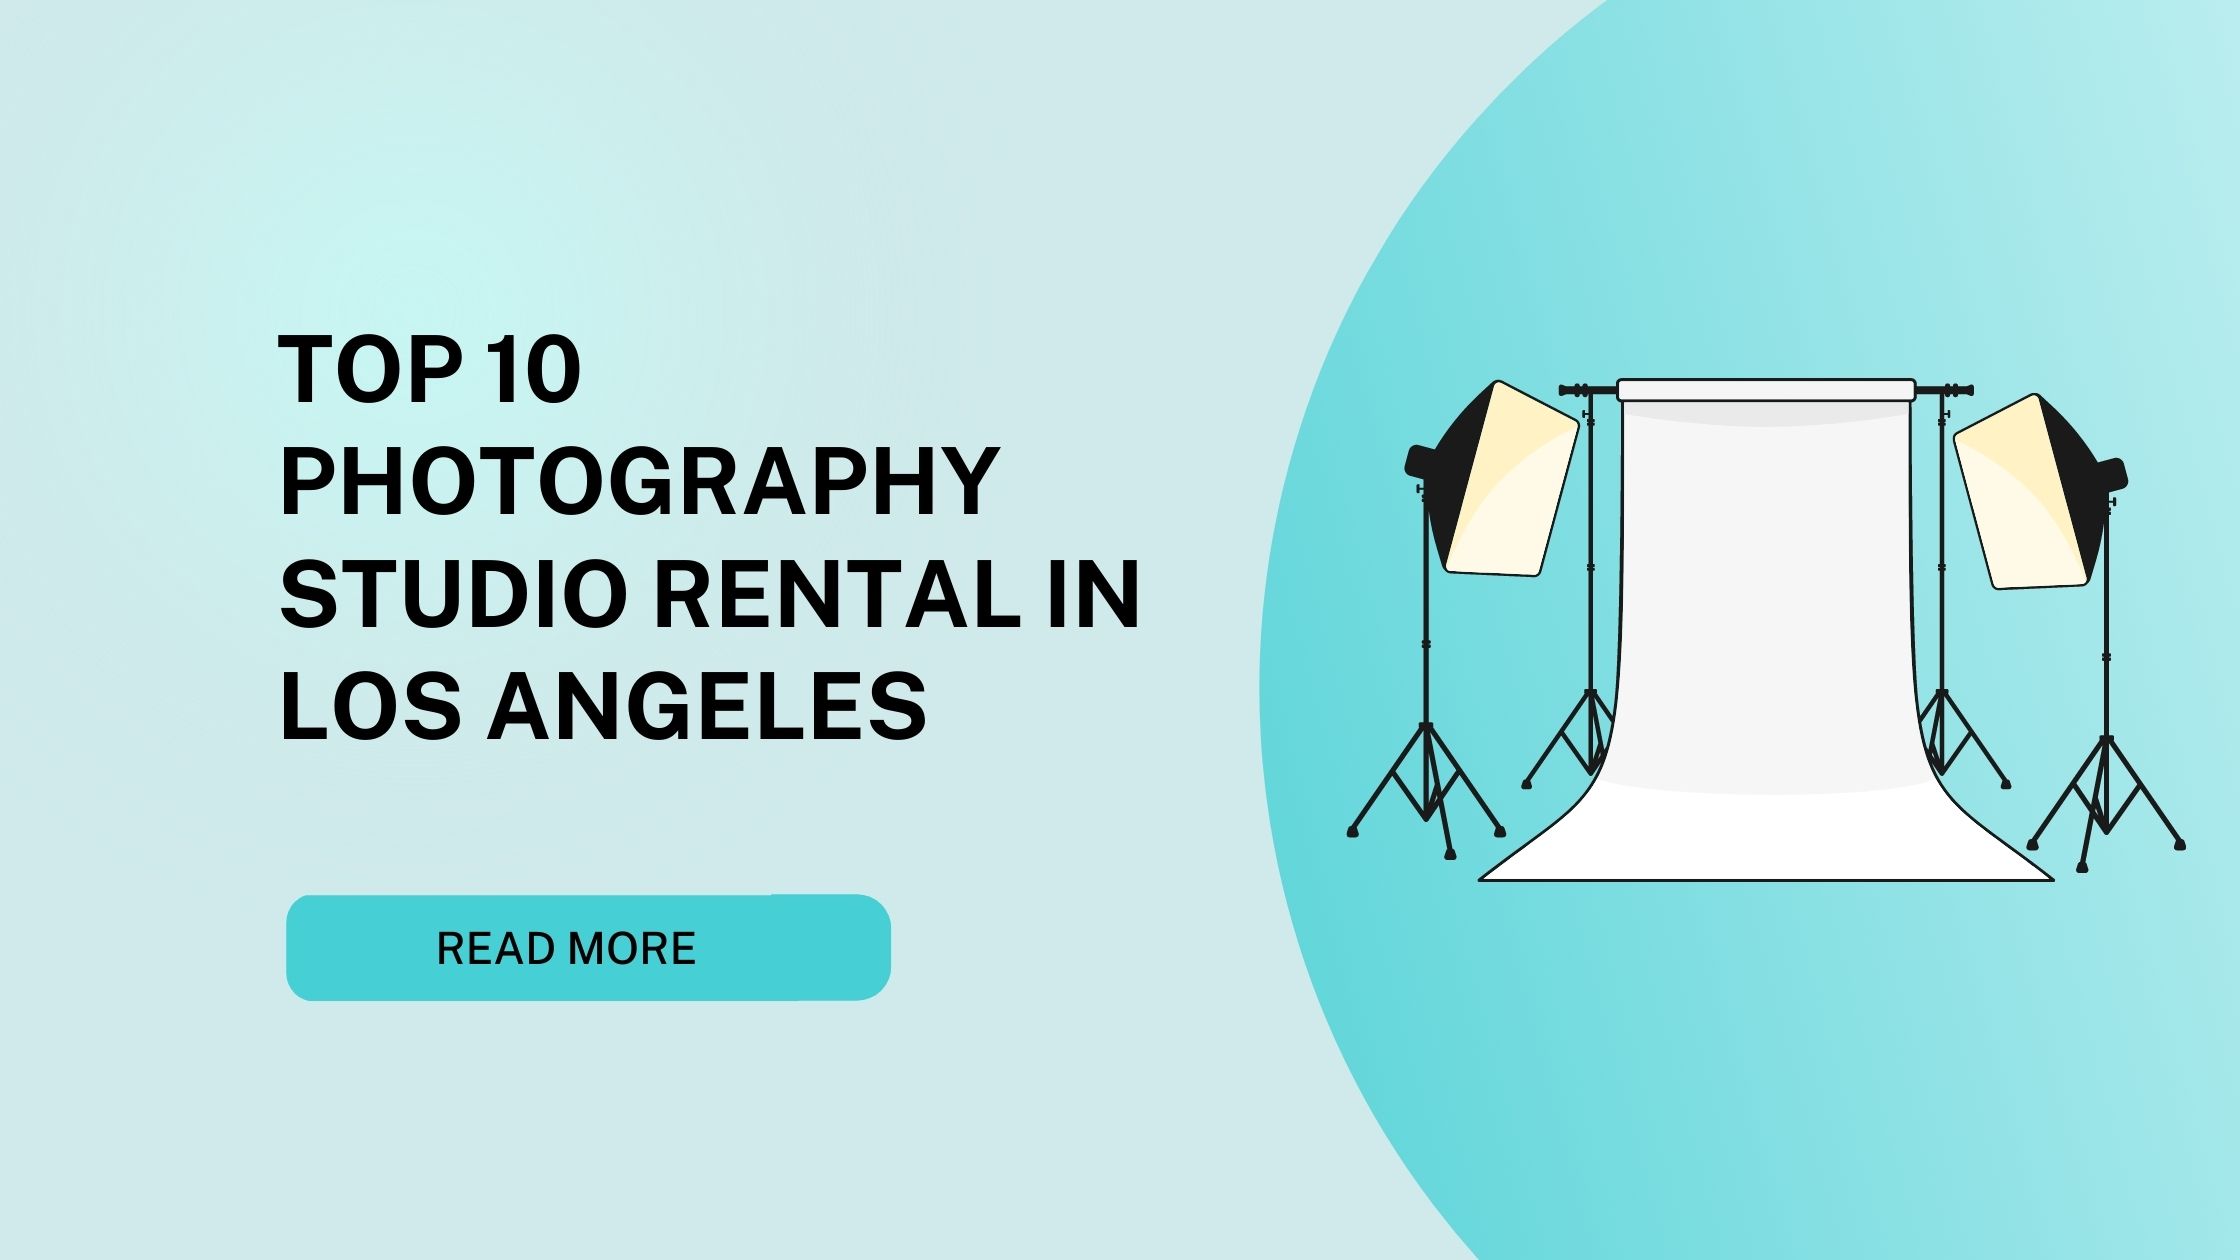 Top 10 Photography Studio Rental in Los Angeles